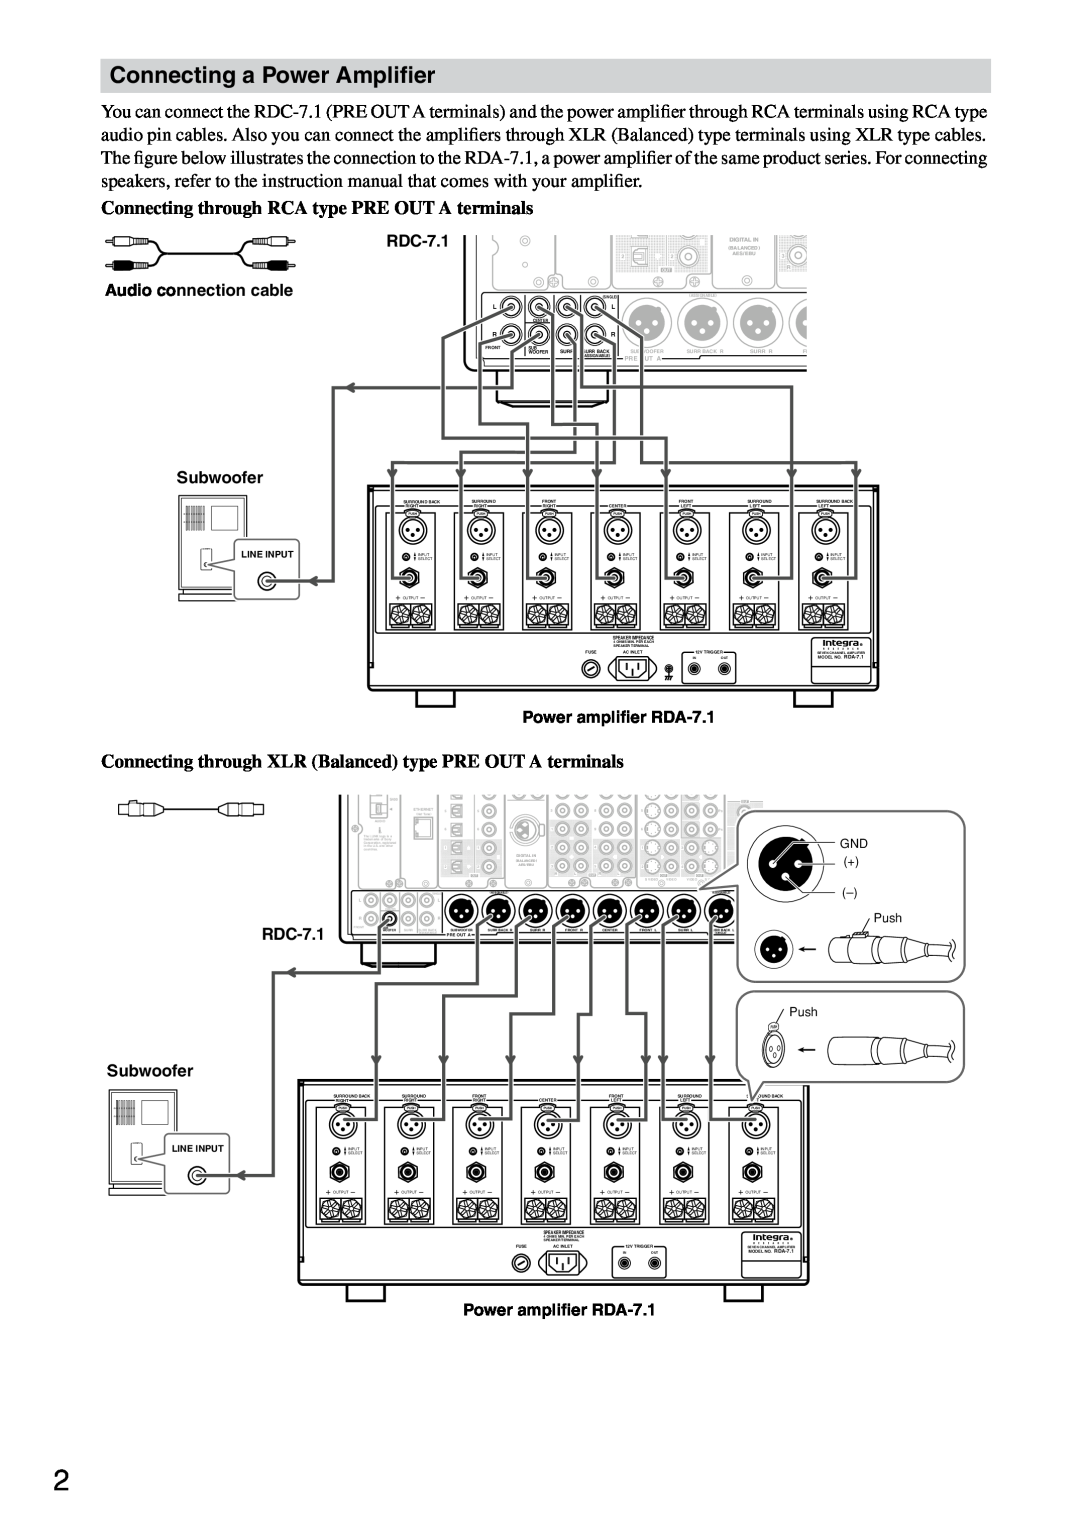 Integra RDC-7.1 Connecting a Power Ampliﬁer, Audio connection cable, Subwoofer, Power ampliﬁer RDA-7.1, GND + - Push 